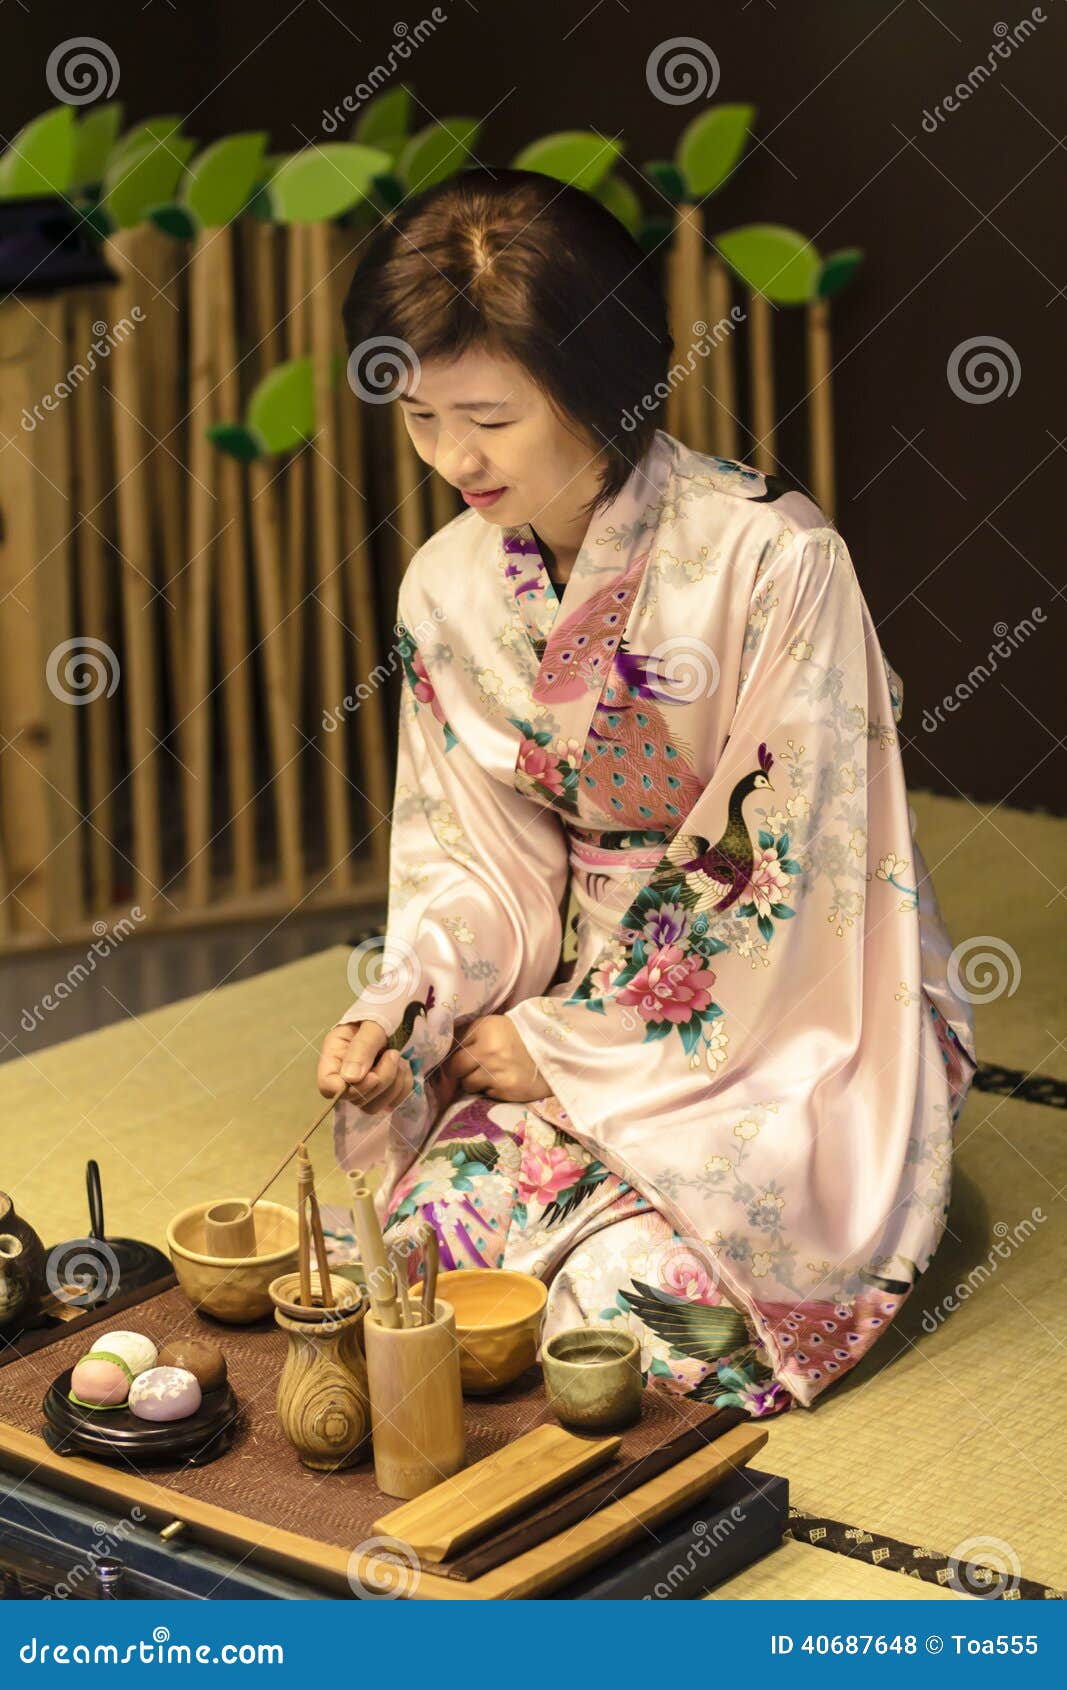 japanese traditional tea ceremony.